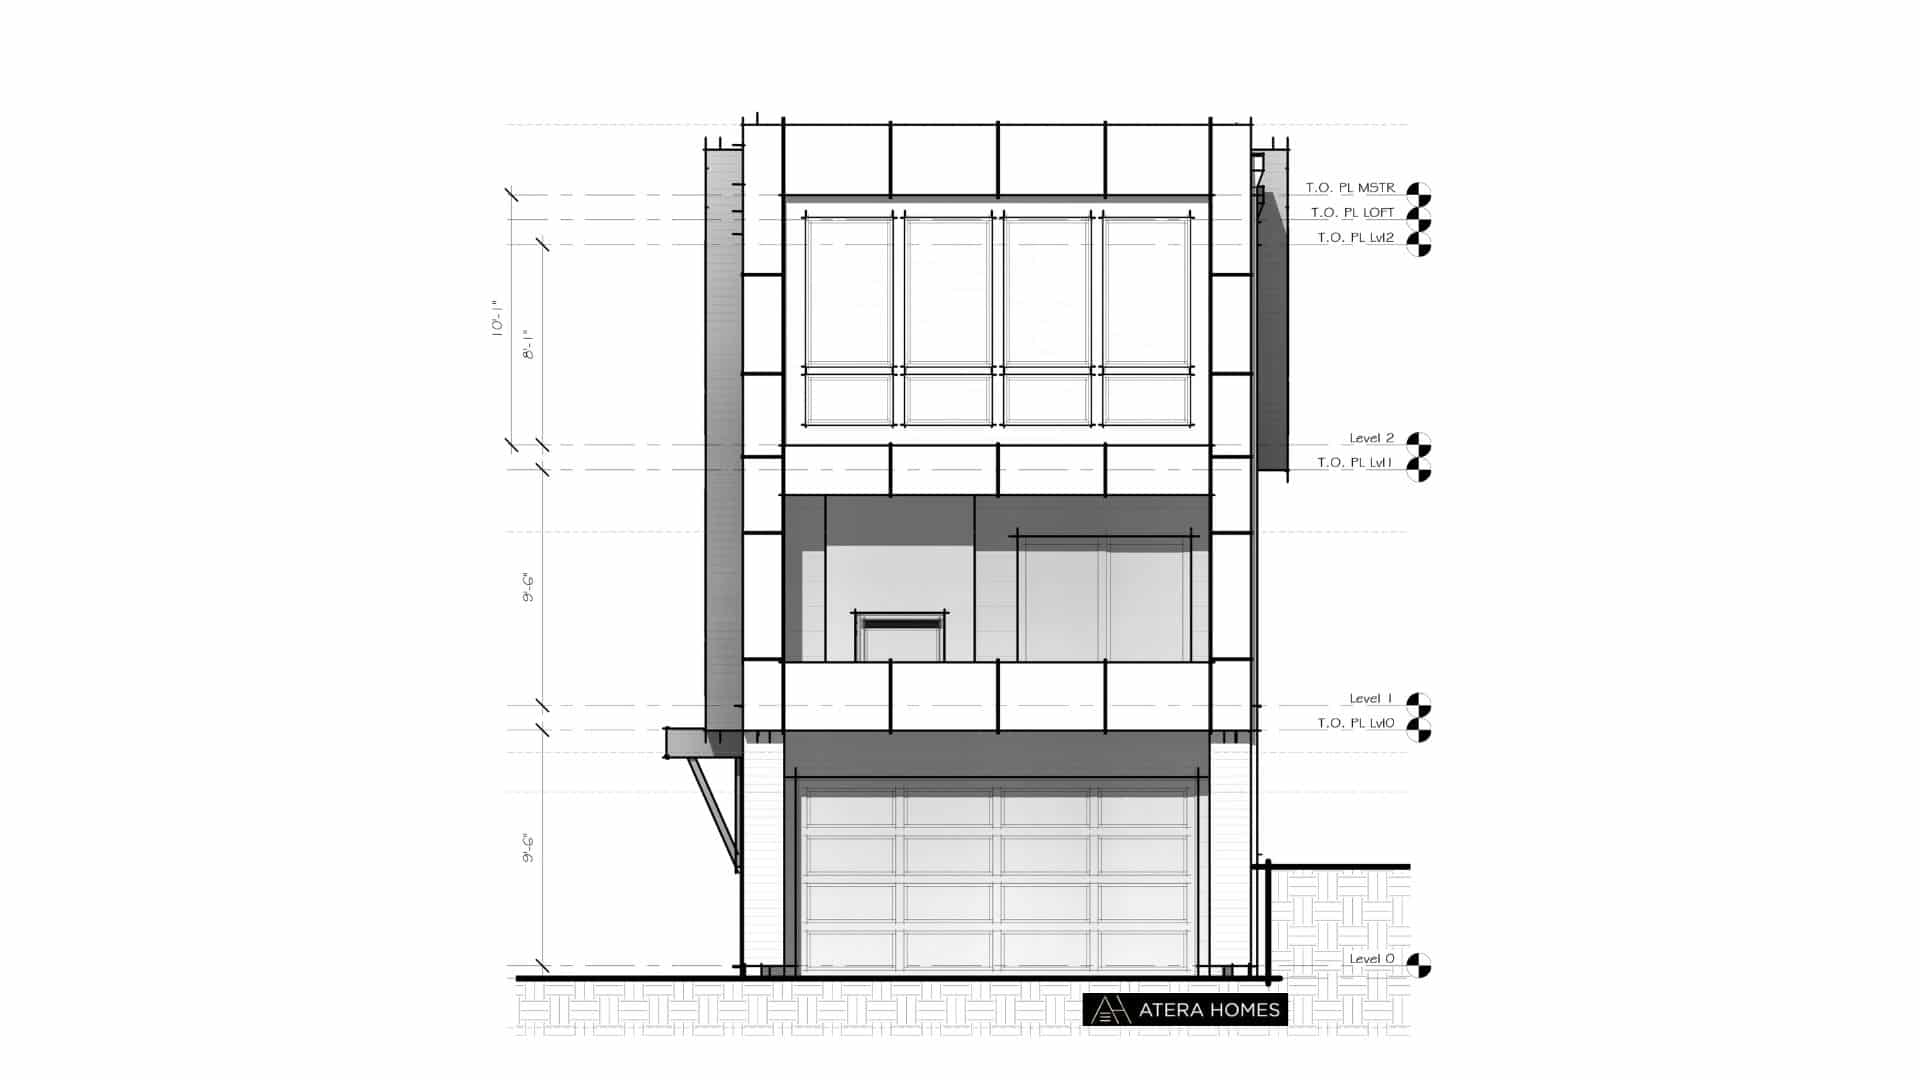 Custom Home Floor Plan - North exterior view